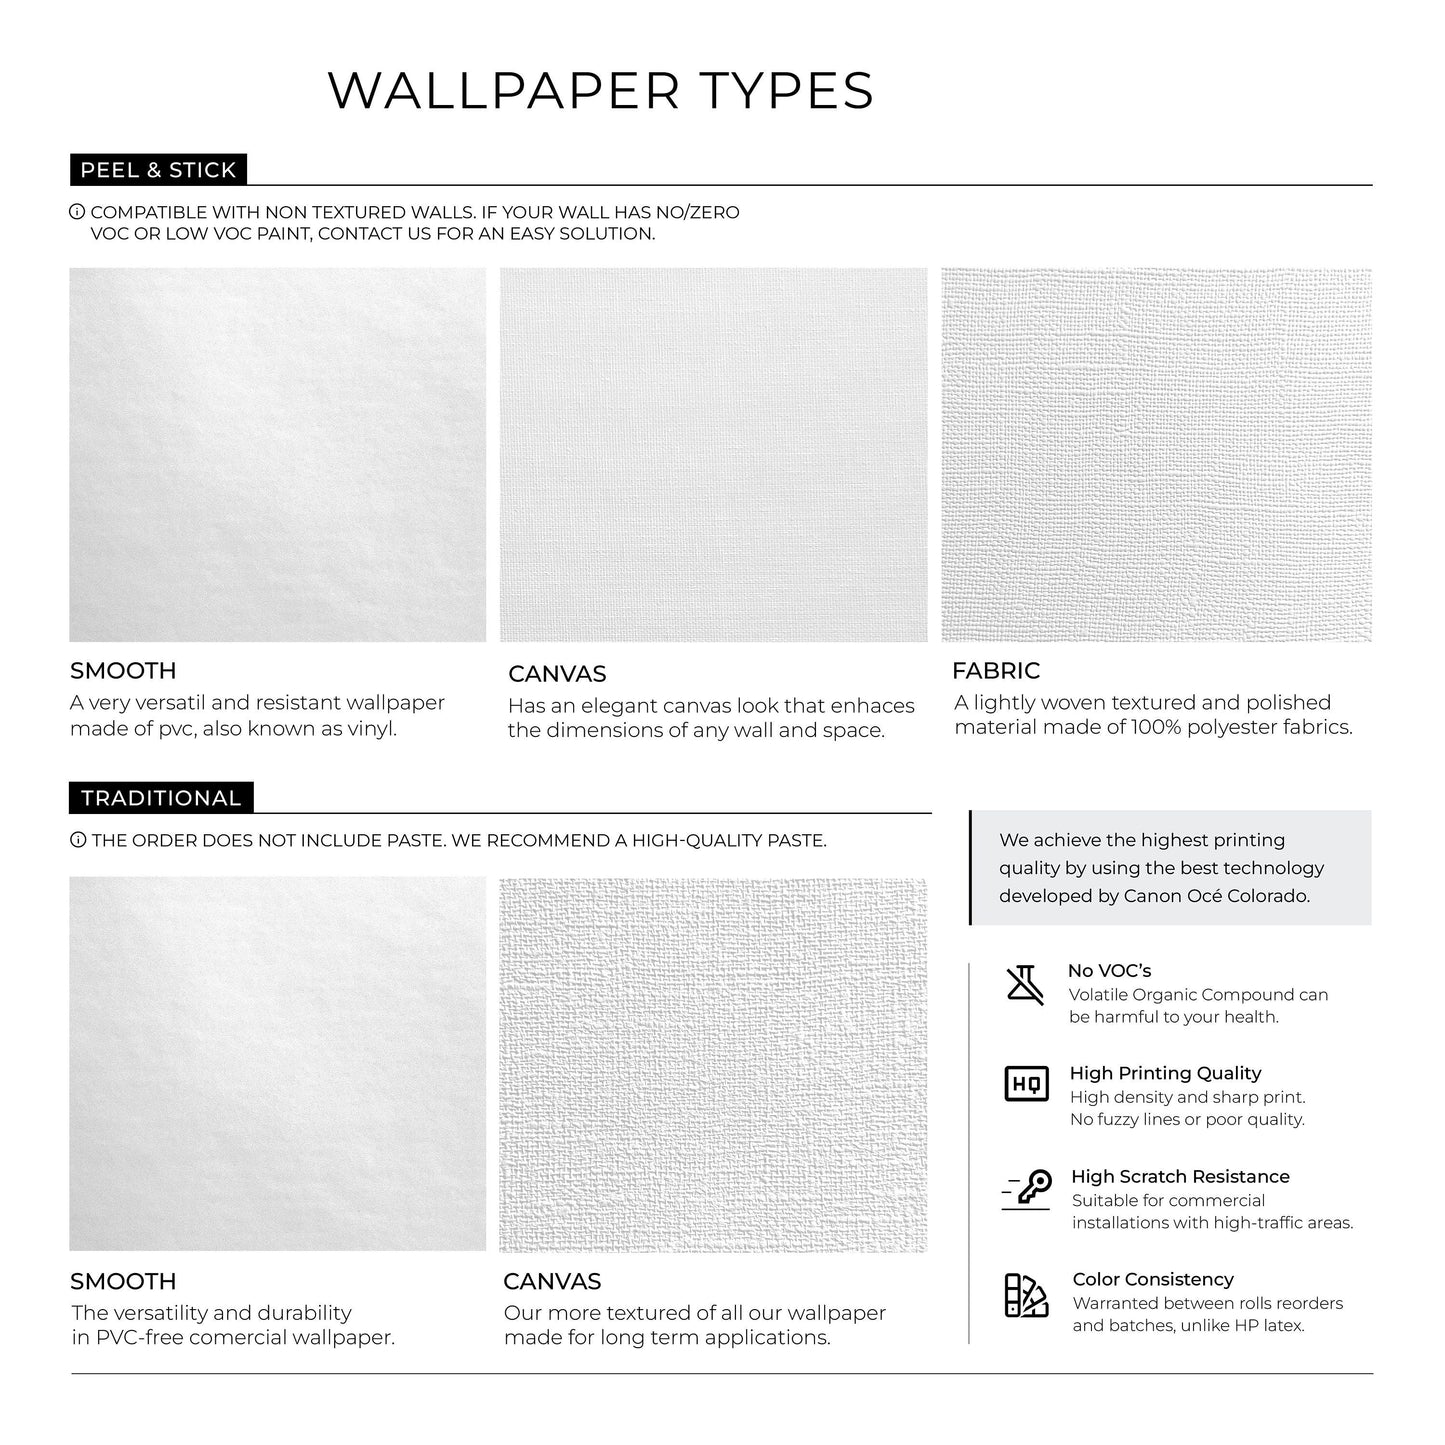 Removable Wallpaper, Tropical Wallpaper, Tropical, Wallpaper, Hawaiian, Leaves Wallpaper, Blue Hawaiian Wallpaper - A971